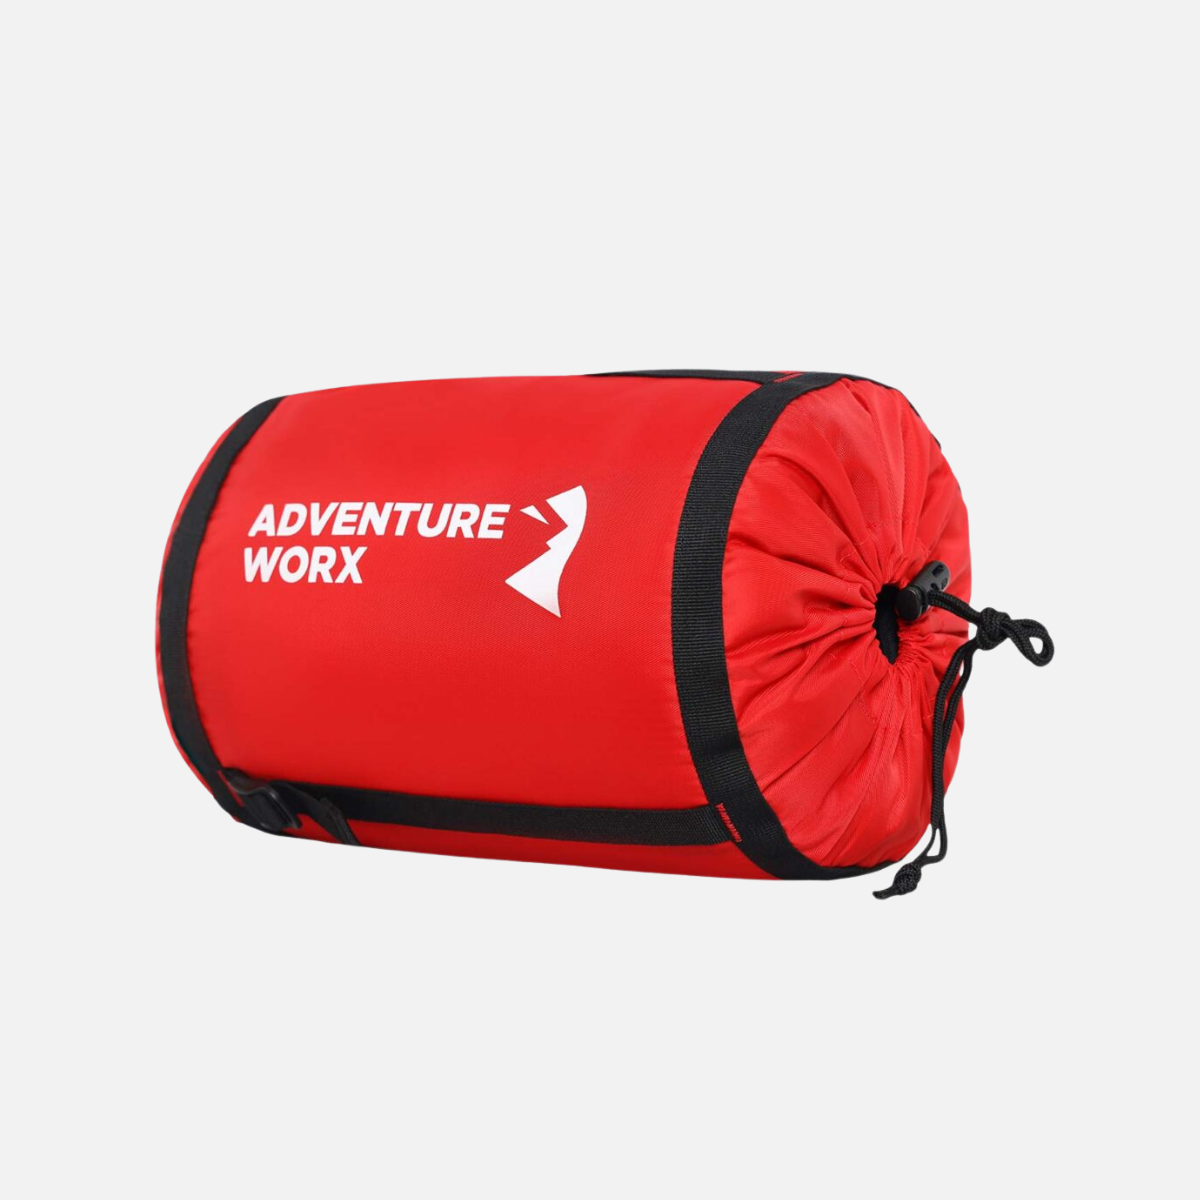 Adventure Worx Low Altitude Camping Sleeping Bag -Red/Black